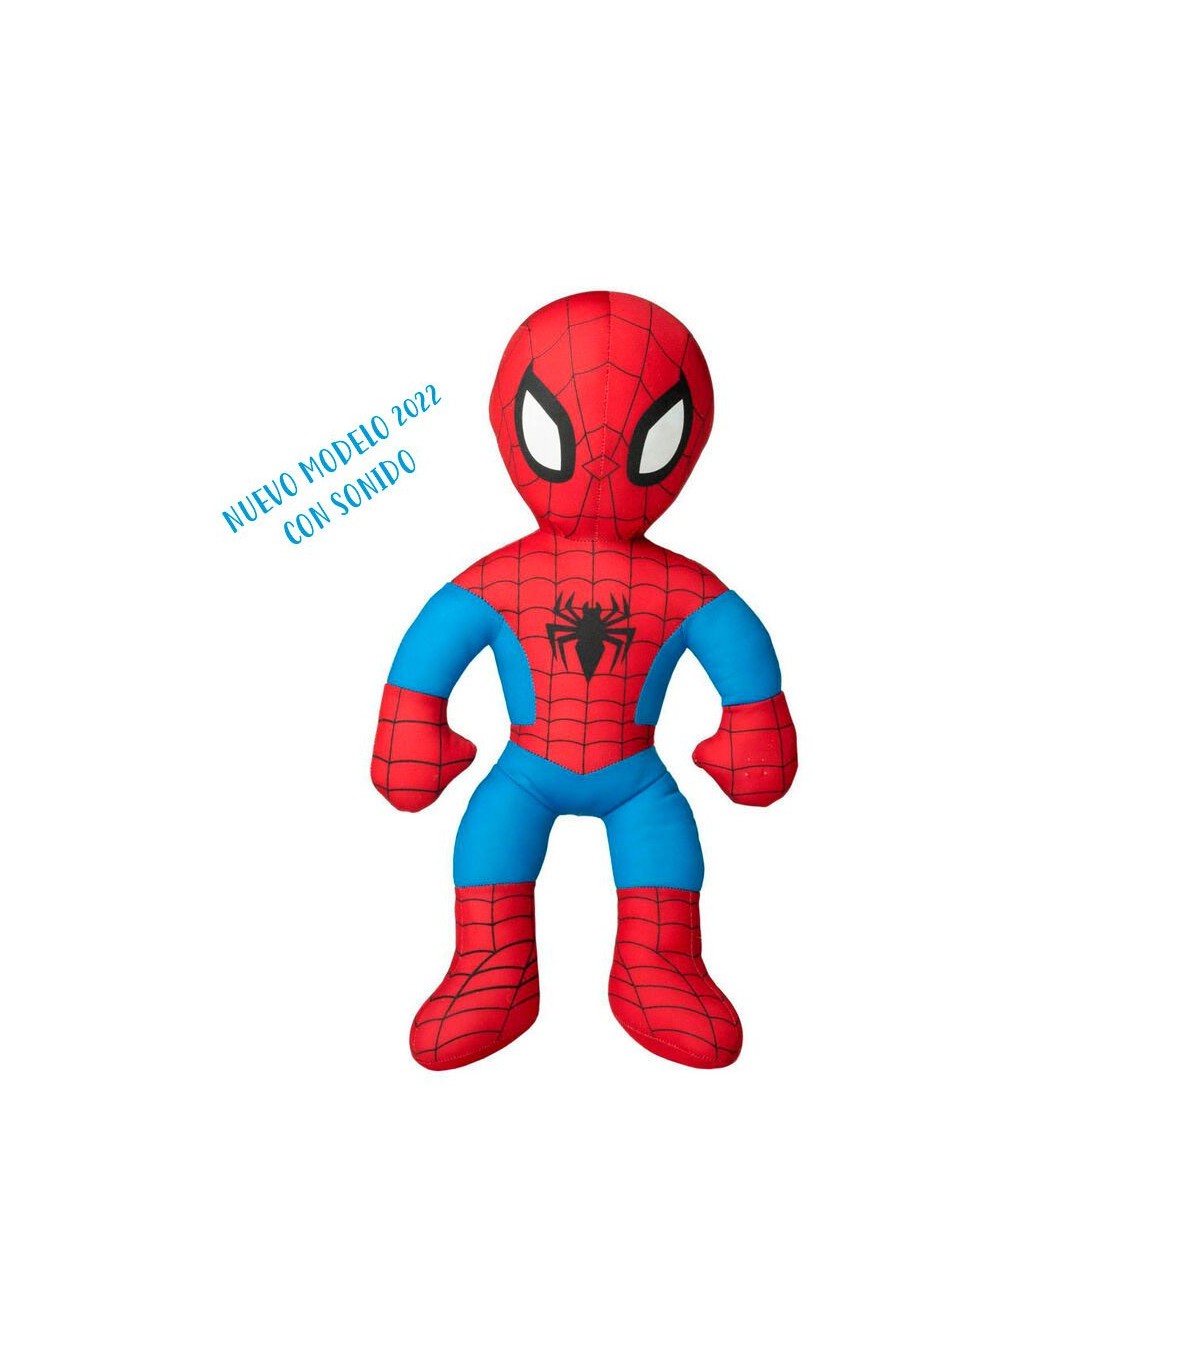 Taza Spiderman Original: Compra Online en Oferta